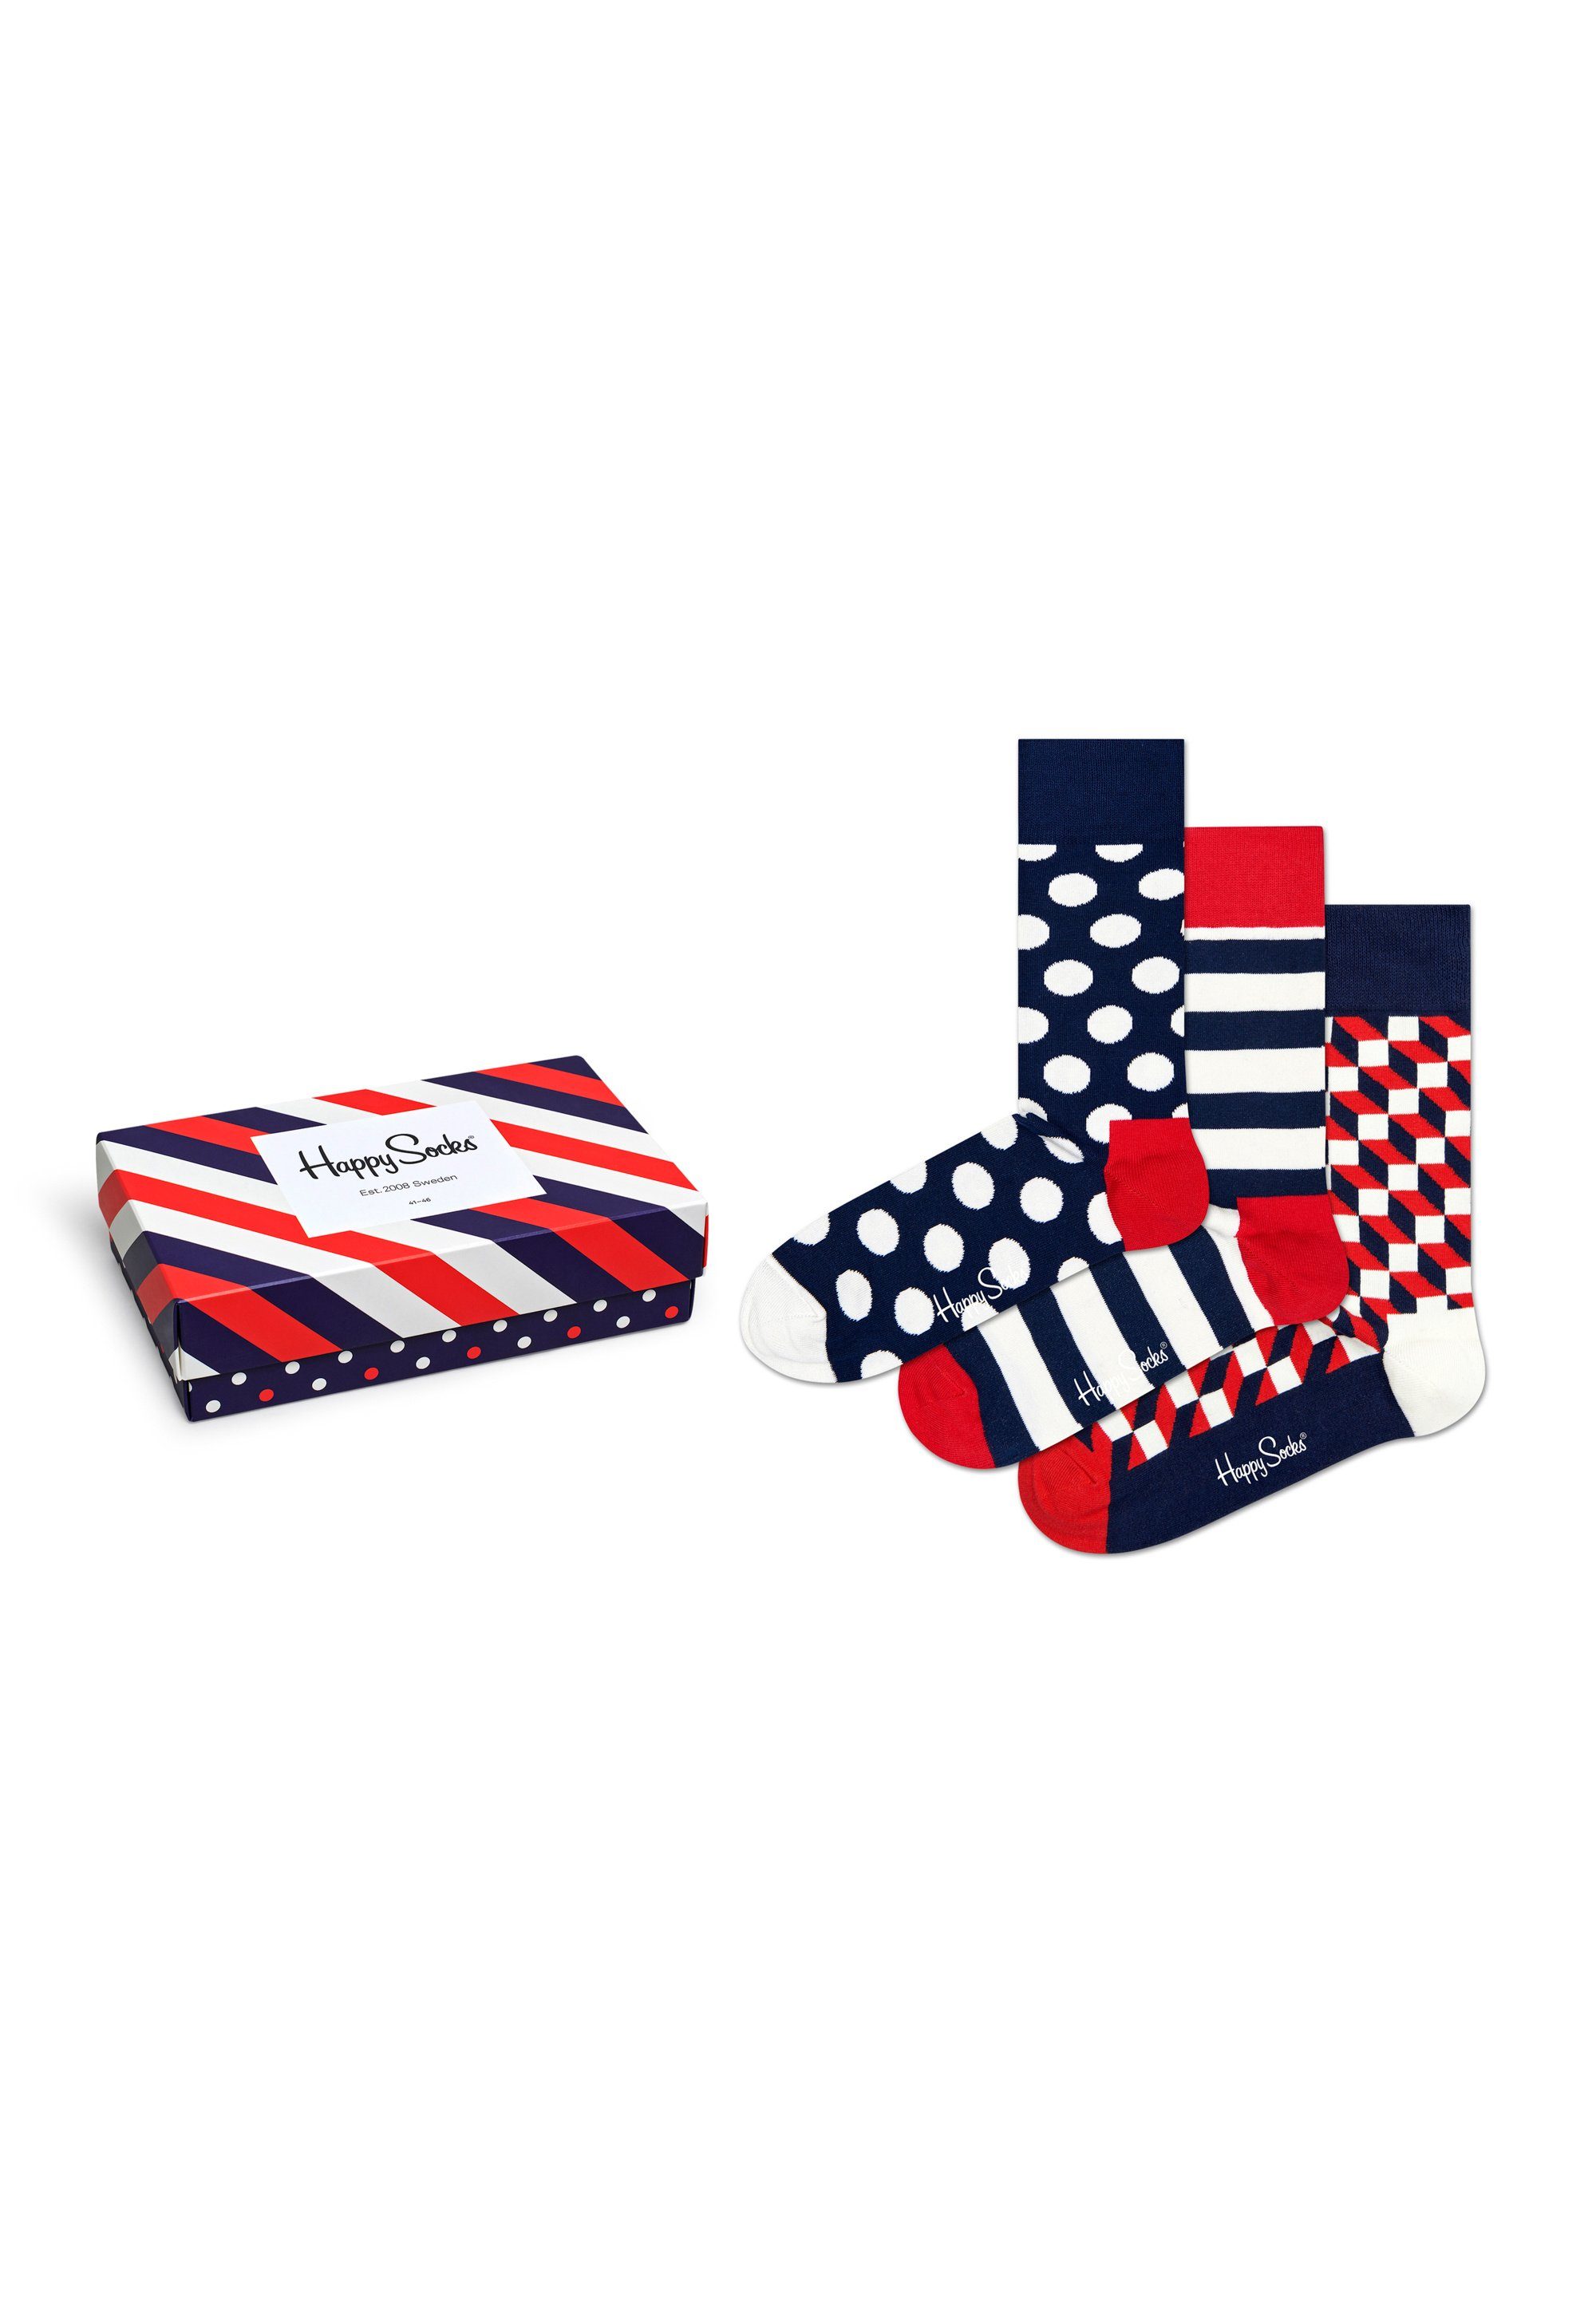 Socks Socks nachhaltiger Navy aus Gift Basicsocken Happy 3-Pack Set Baumwolle Classic